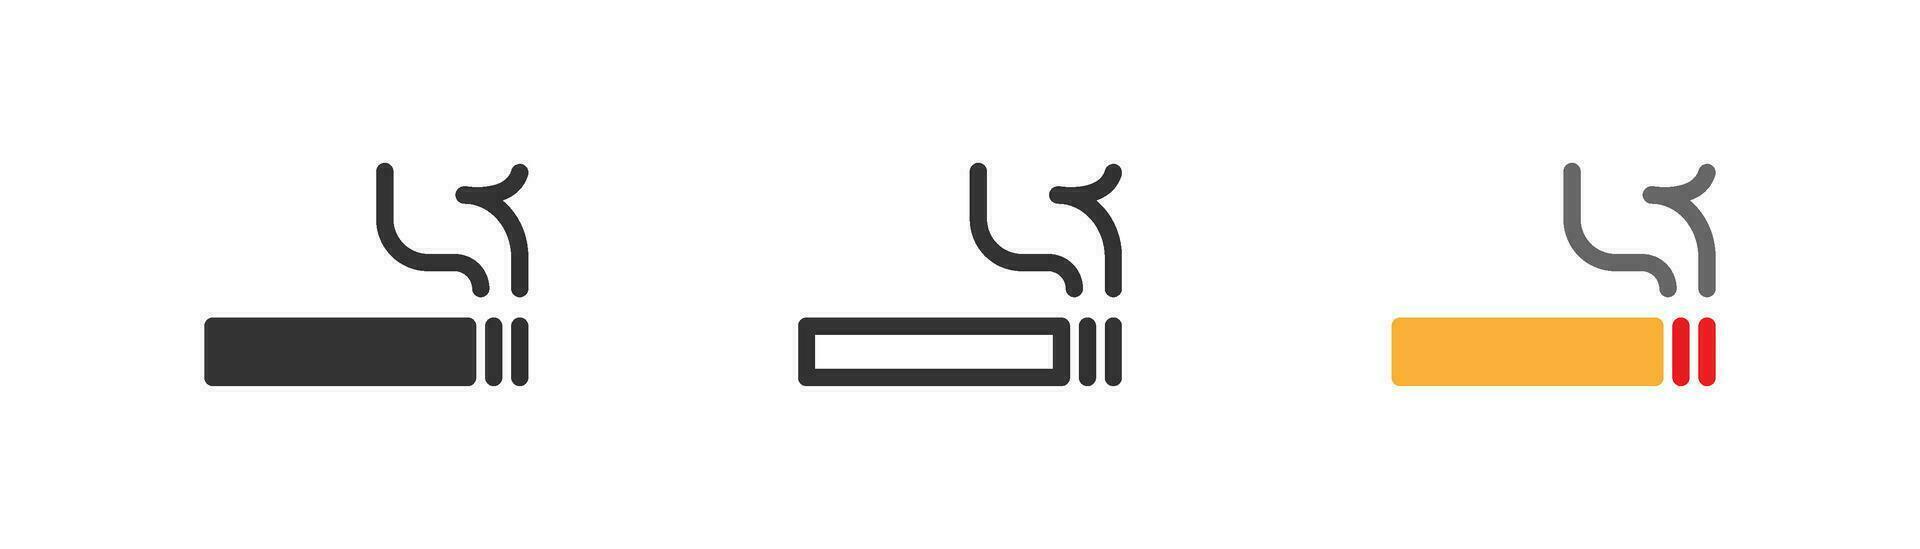 Cigarette editable icon, smoking cigarette and smoke, vector illustration